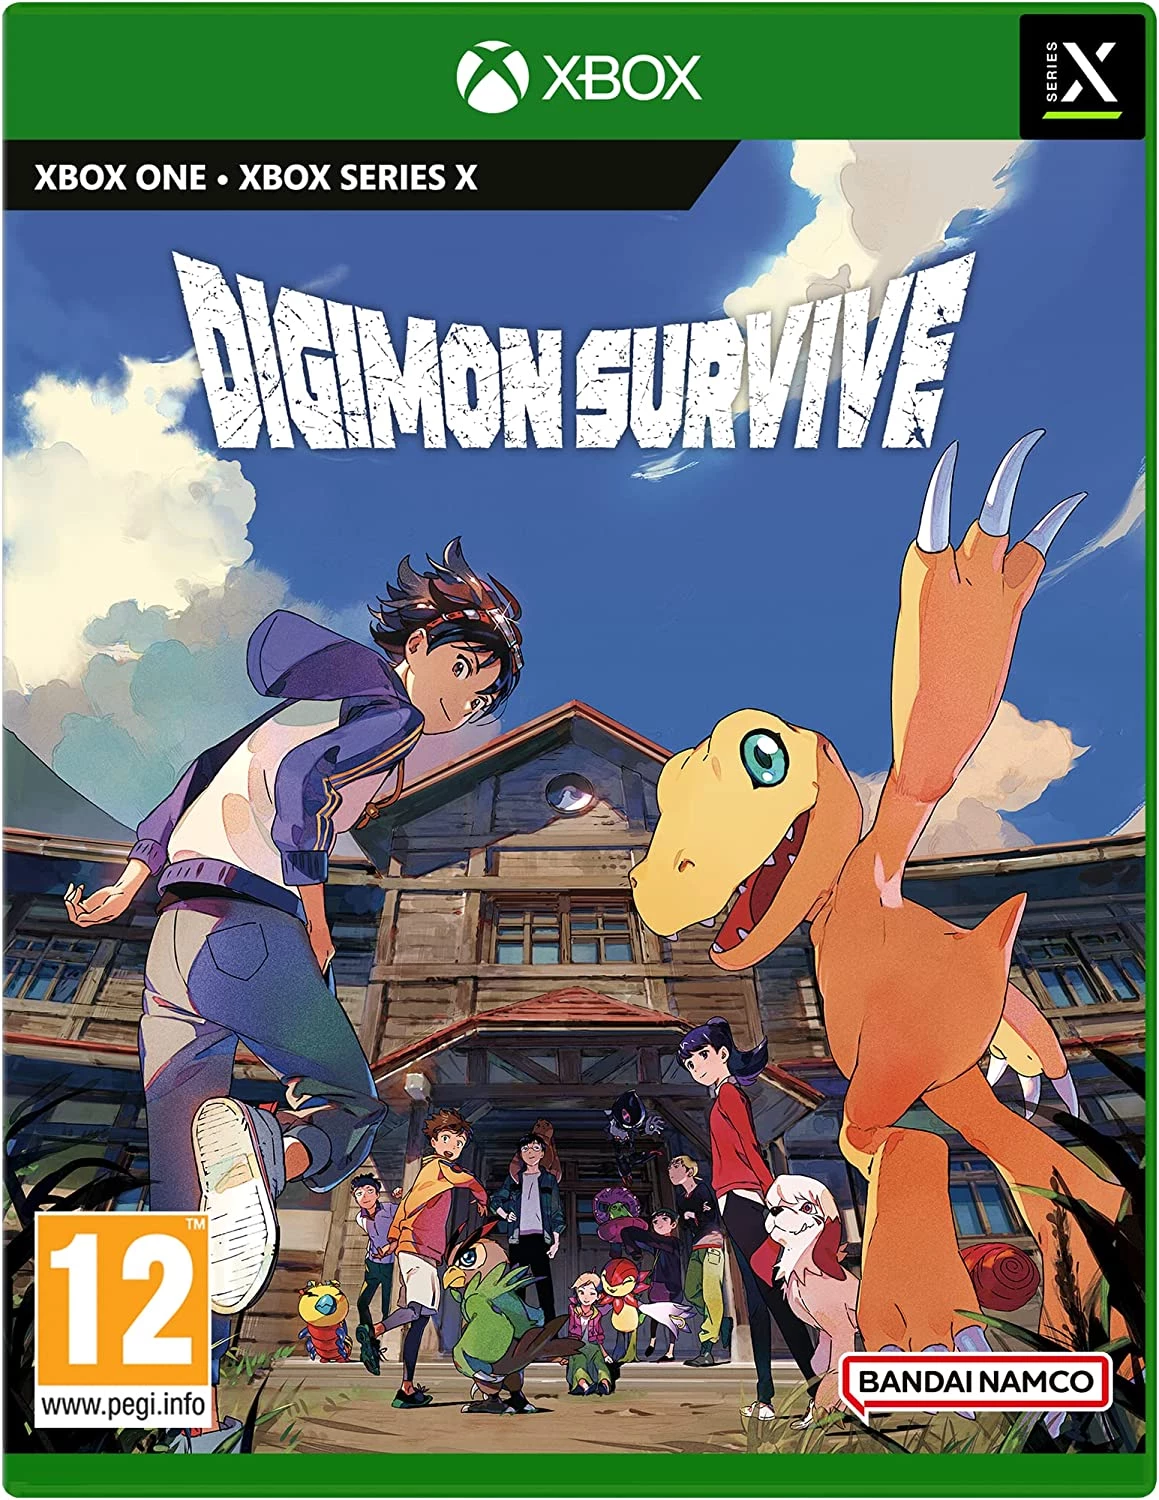 Digimon: Survive